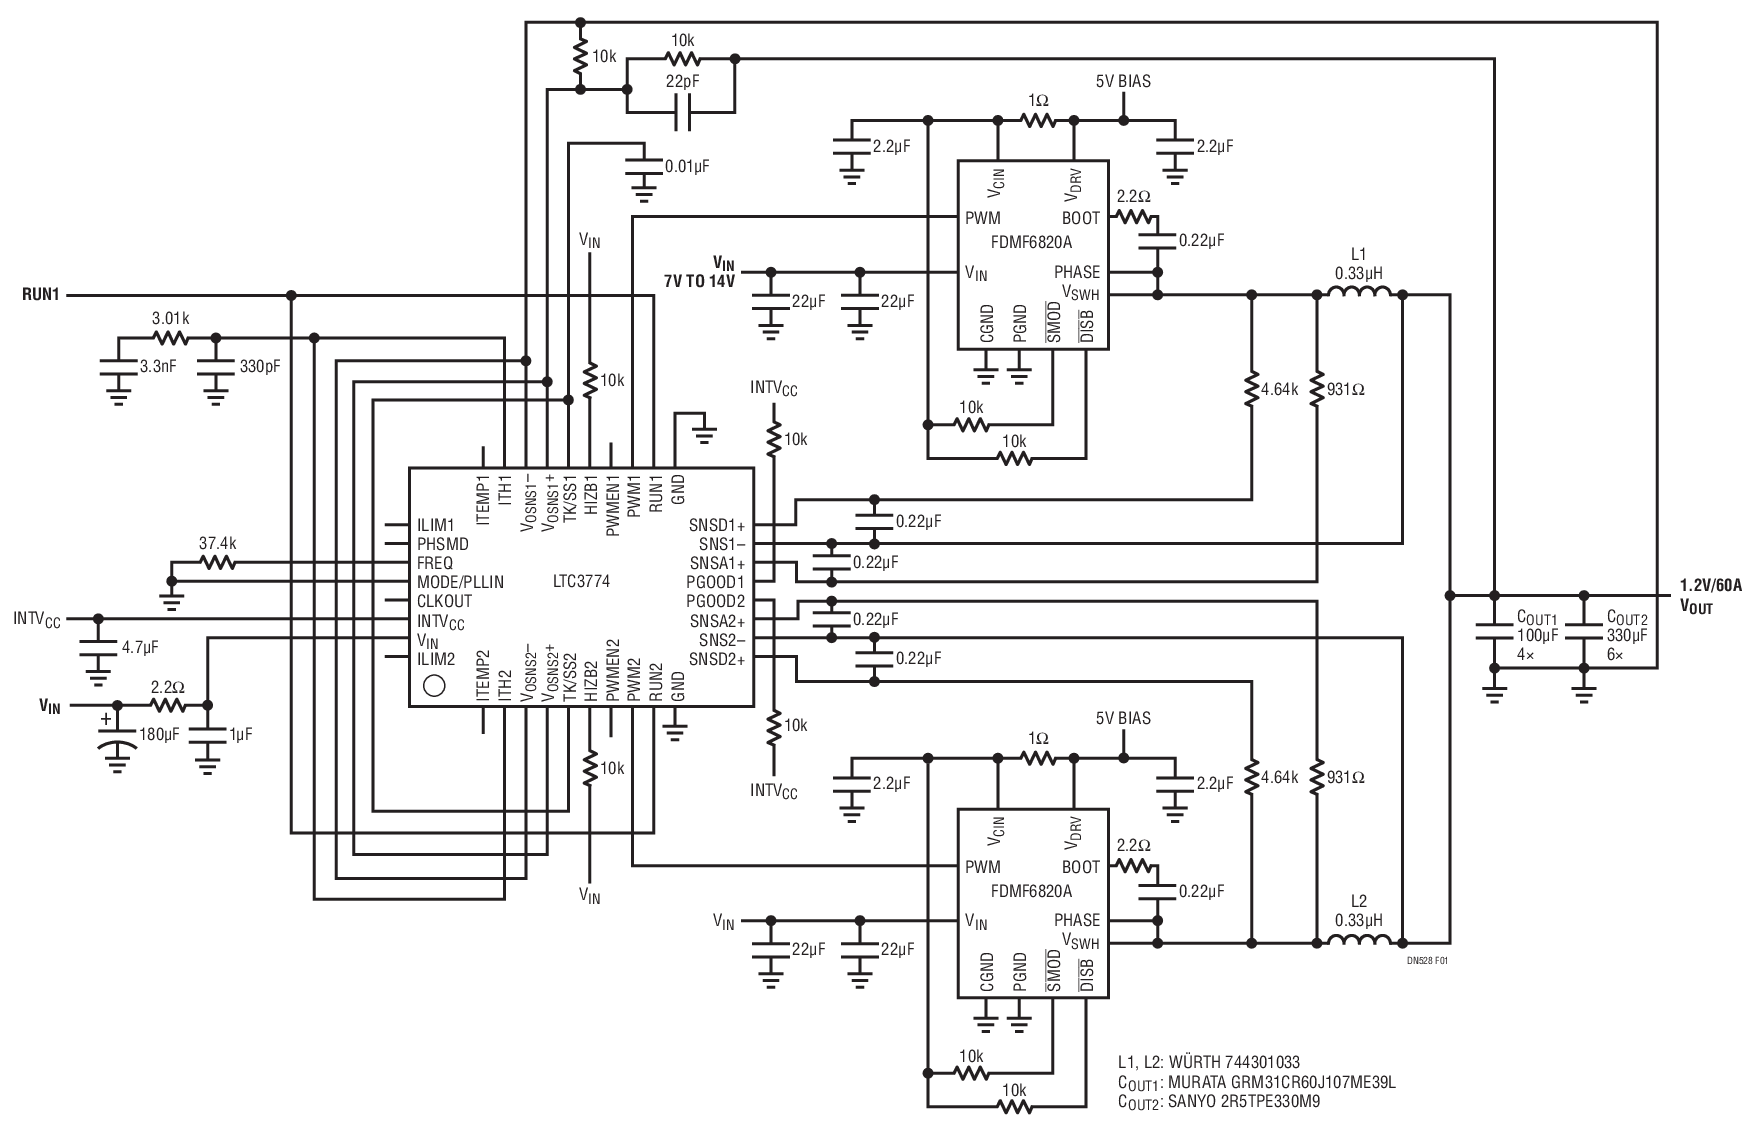 Dual Phase, 1.2V/60A LTC3774 Converter Operating at fSW = 400kHz, 7V ≤ VIN ≤ 14V